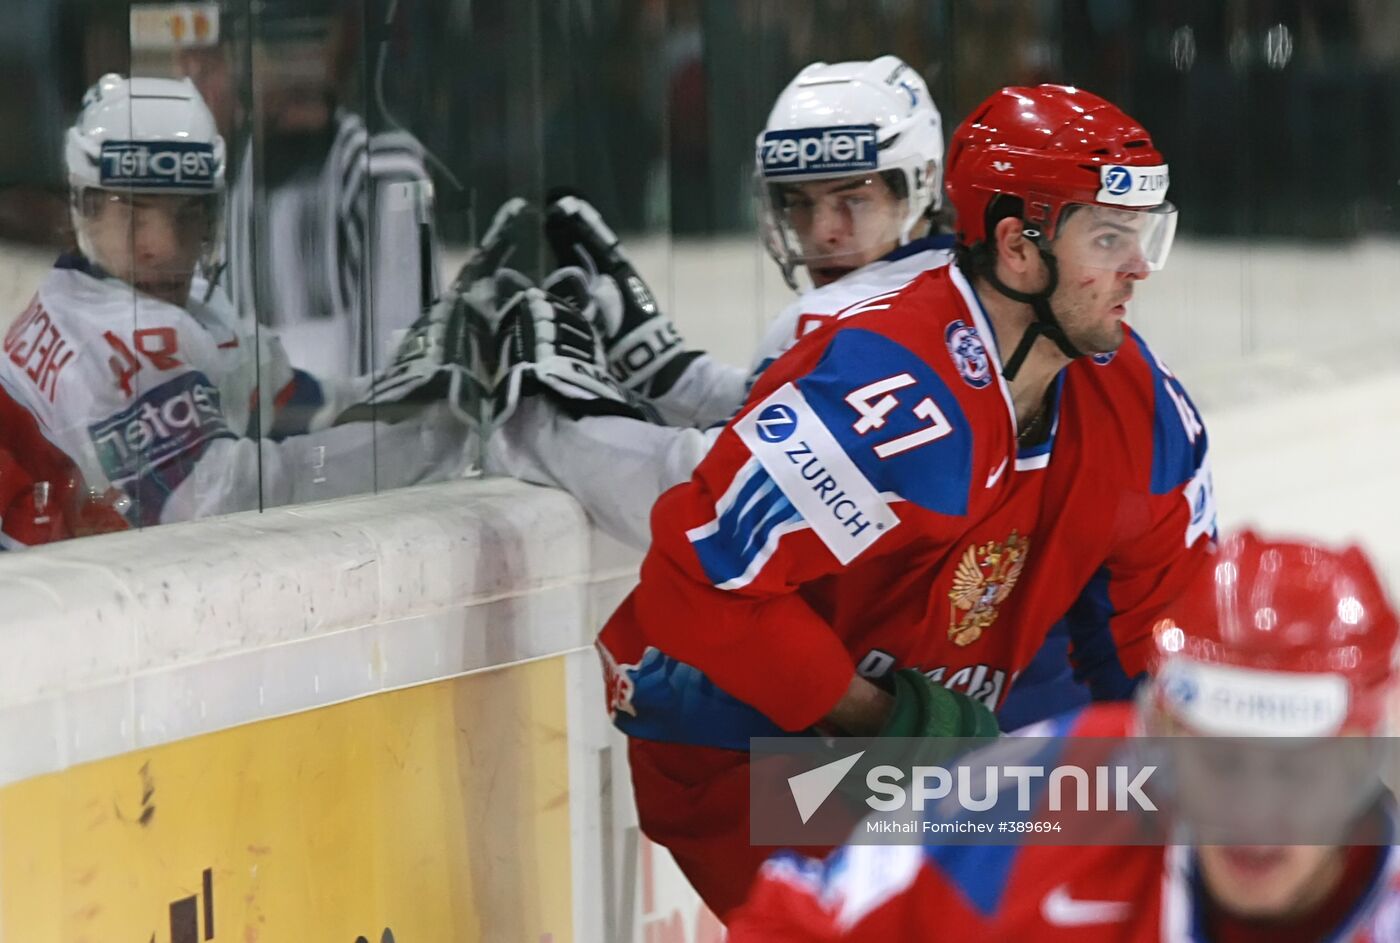 2009 Ice Hockey World Championship: Russia vs. France 7-2